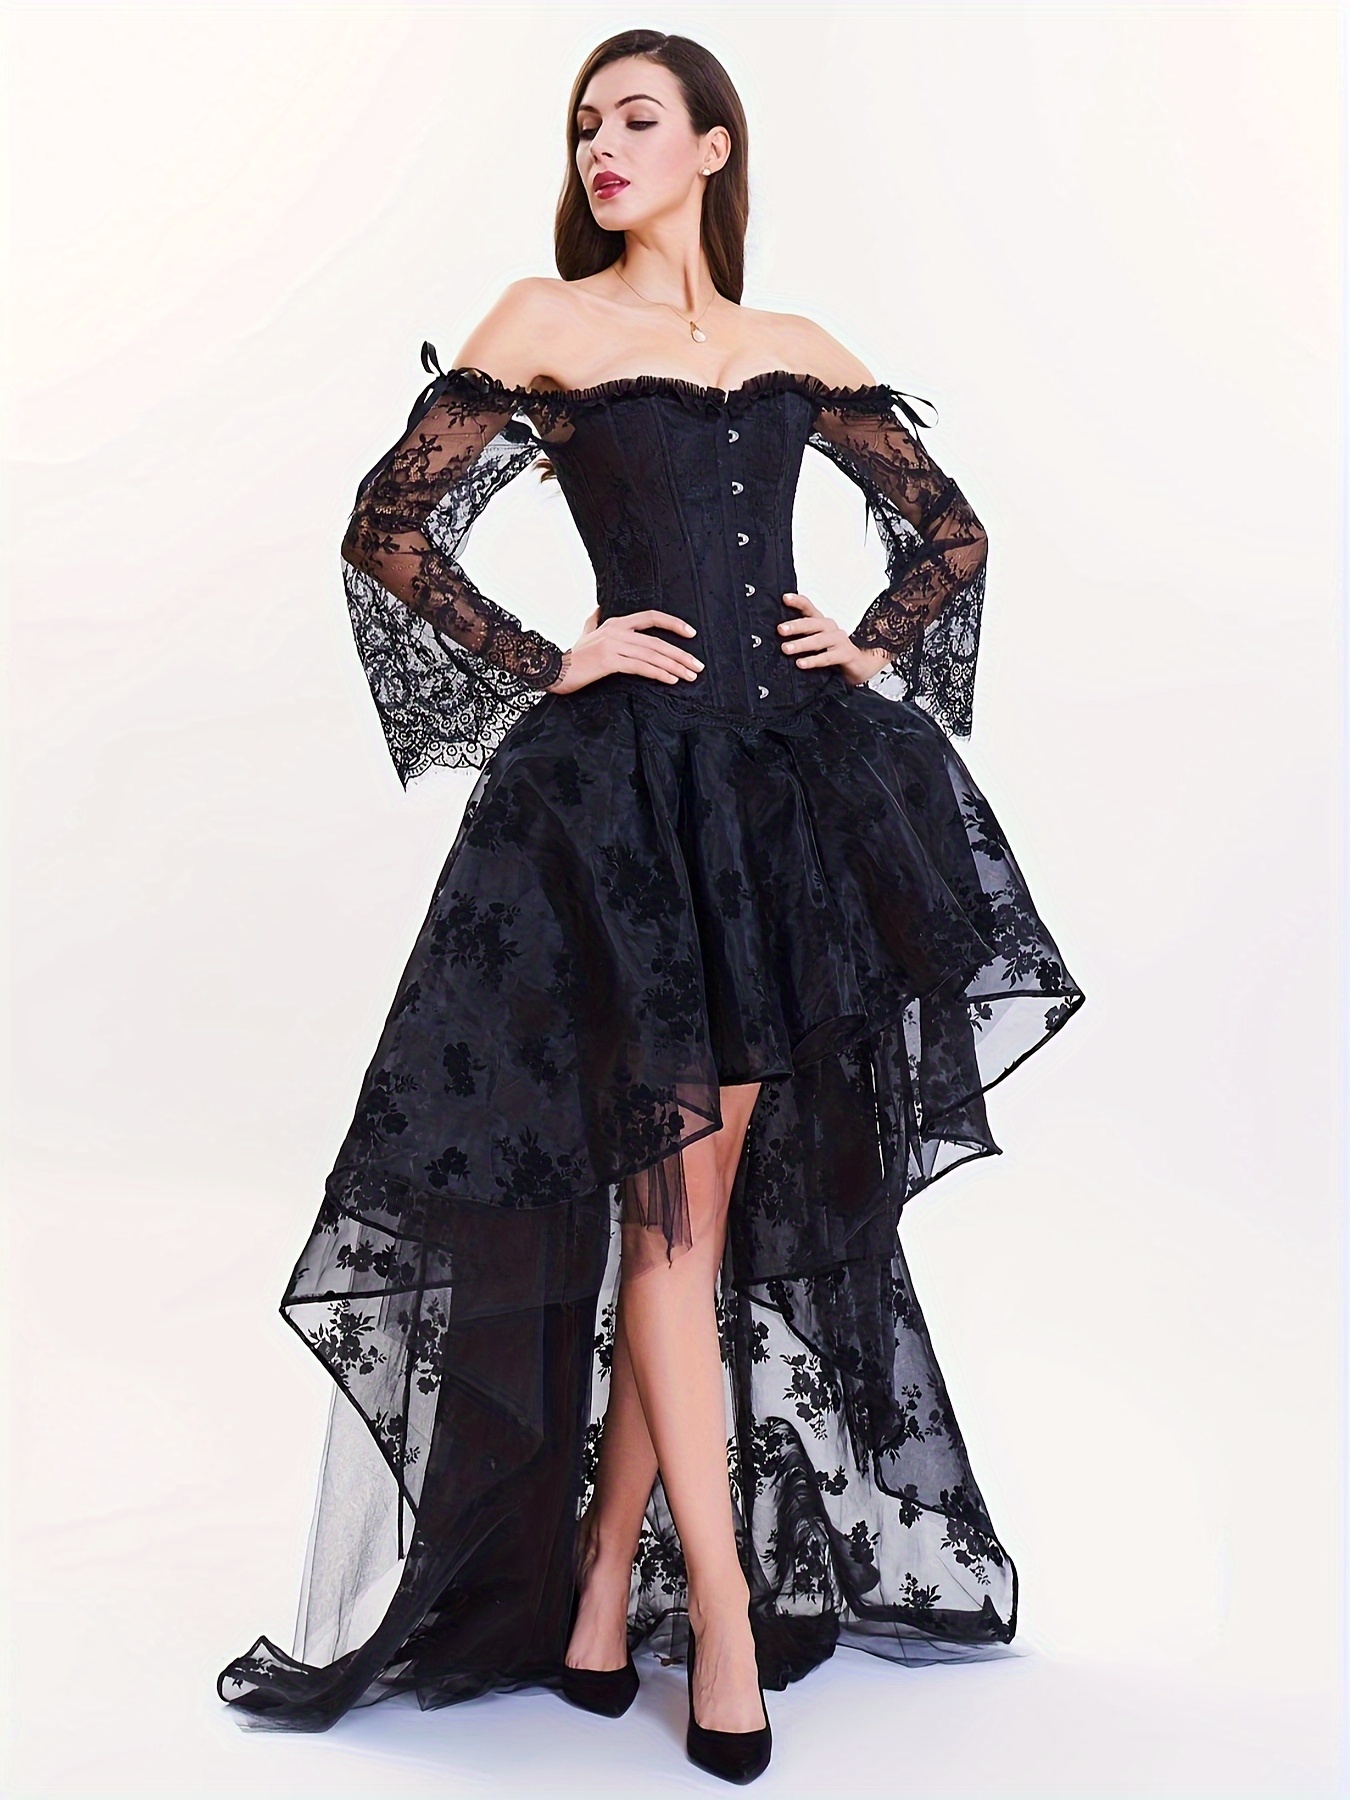 underbust corset dress skirt tutu blouse top 3 Pcs Women Gothic Lace corsets  halloween costumes Black S : : Clothing, Shoes & Accessories